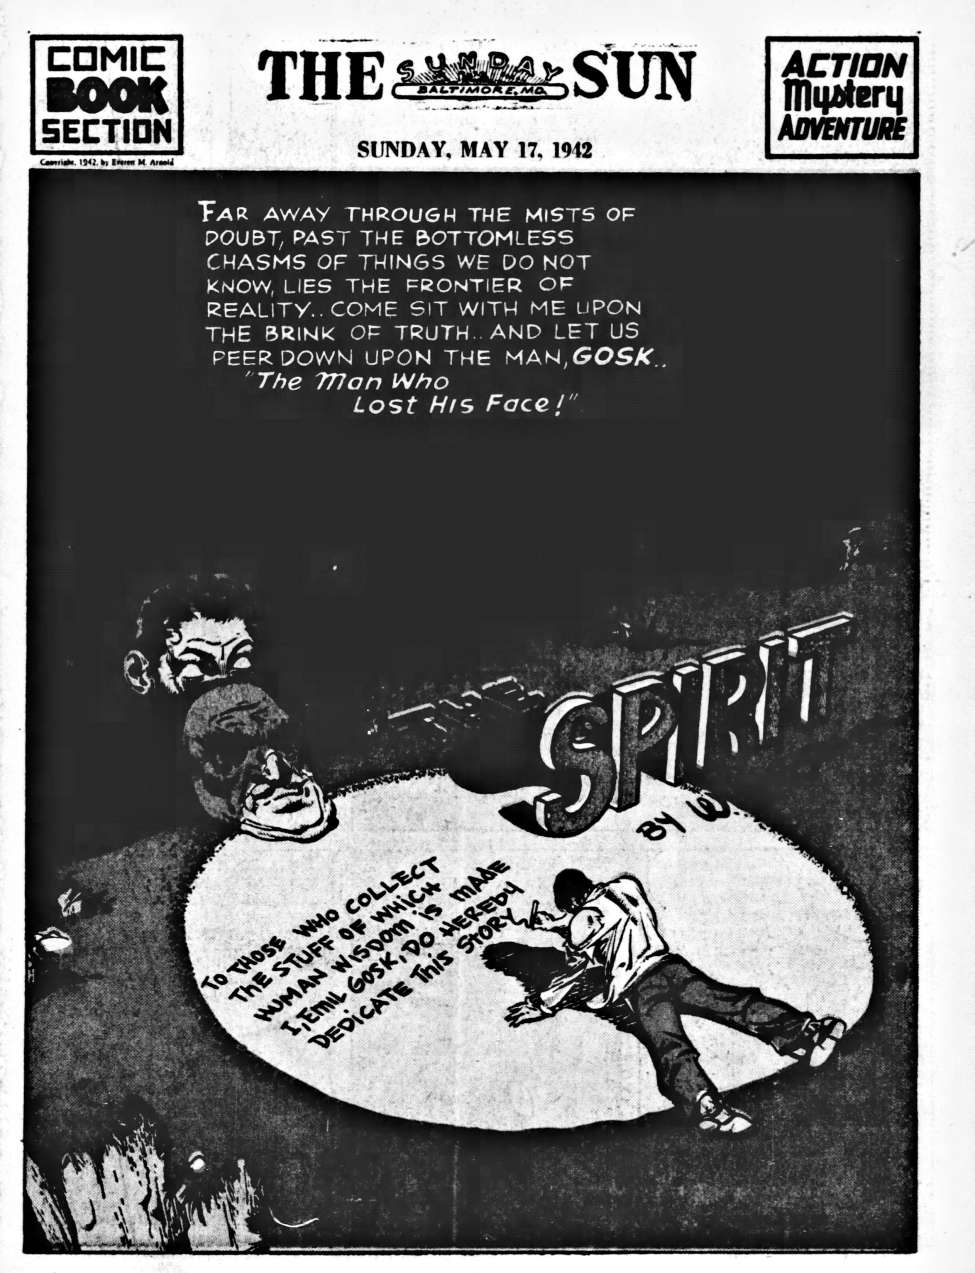 Comic Book Cover For The Spirit (1942-05-17) - Baltimore Sun (b/w)